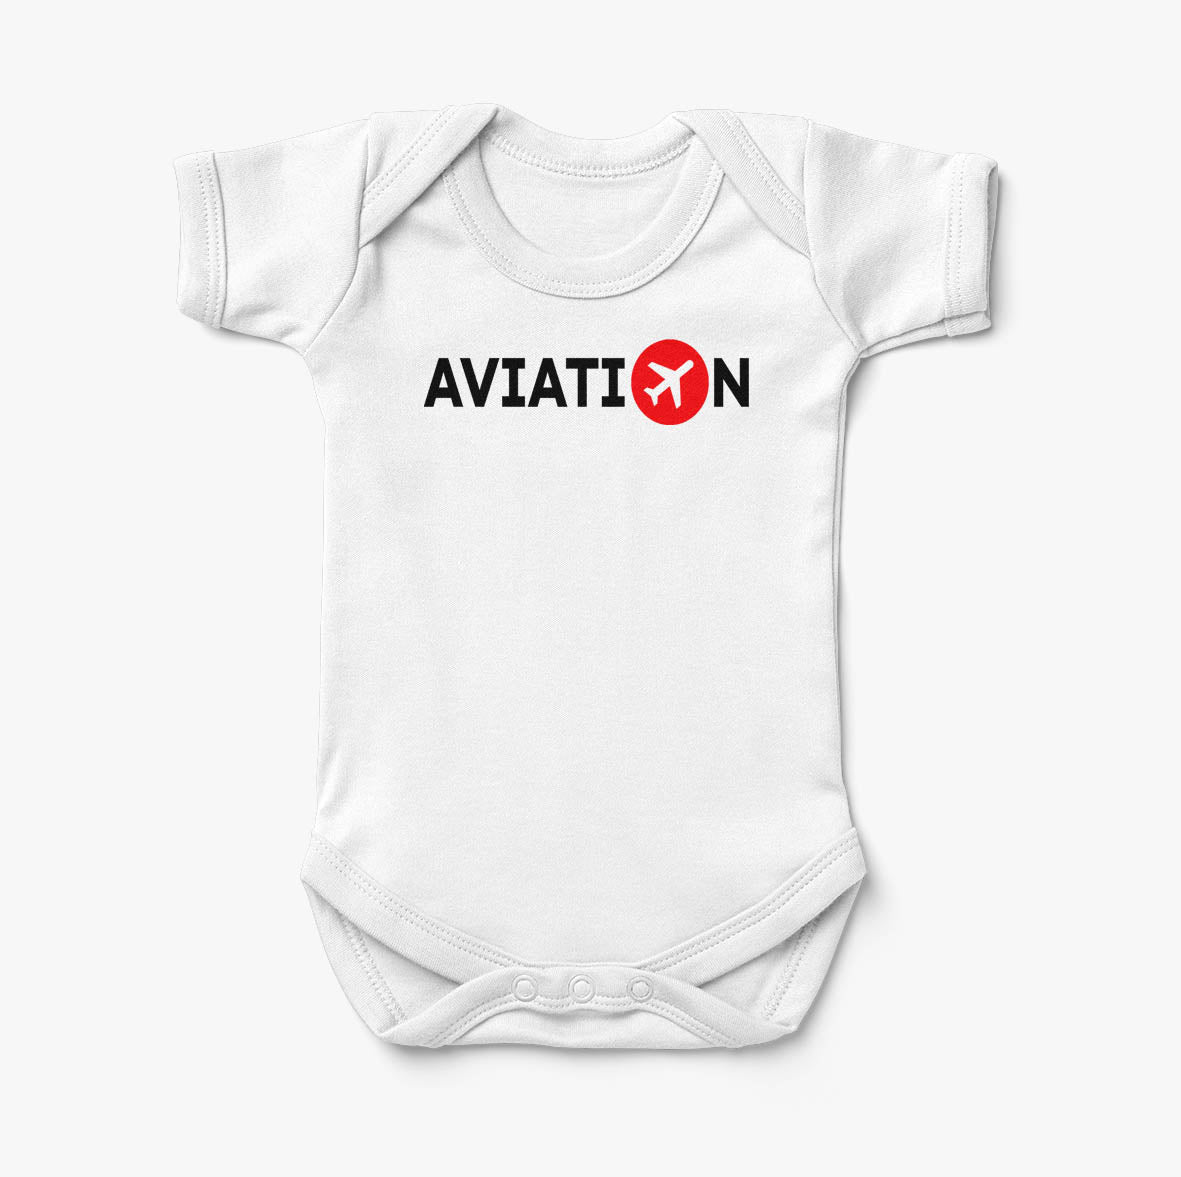 Aviation Designed Baby Bodysuits